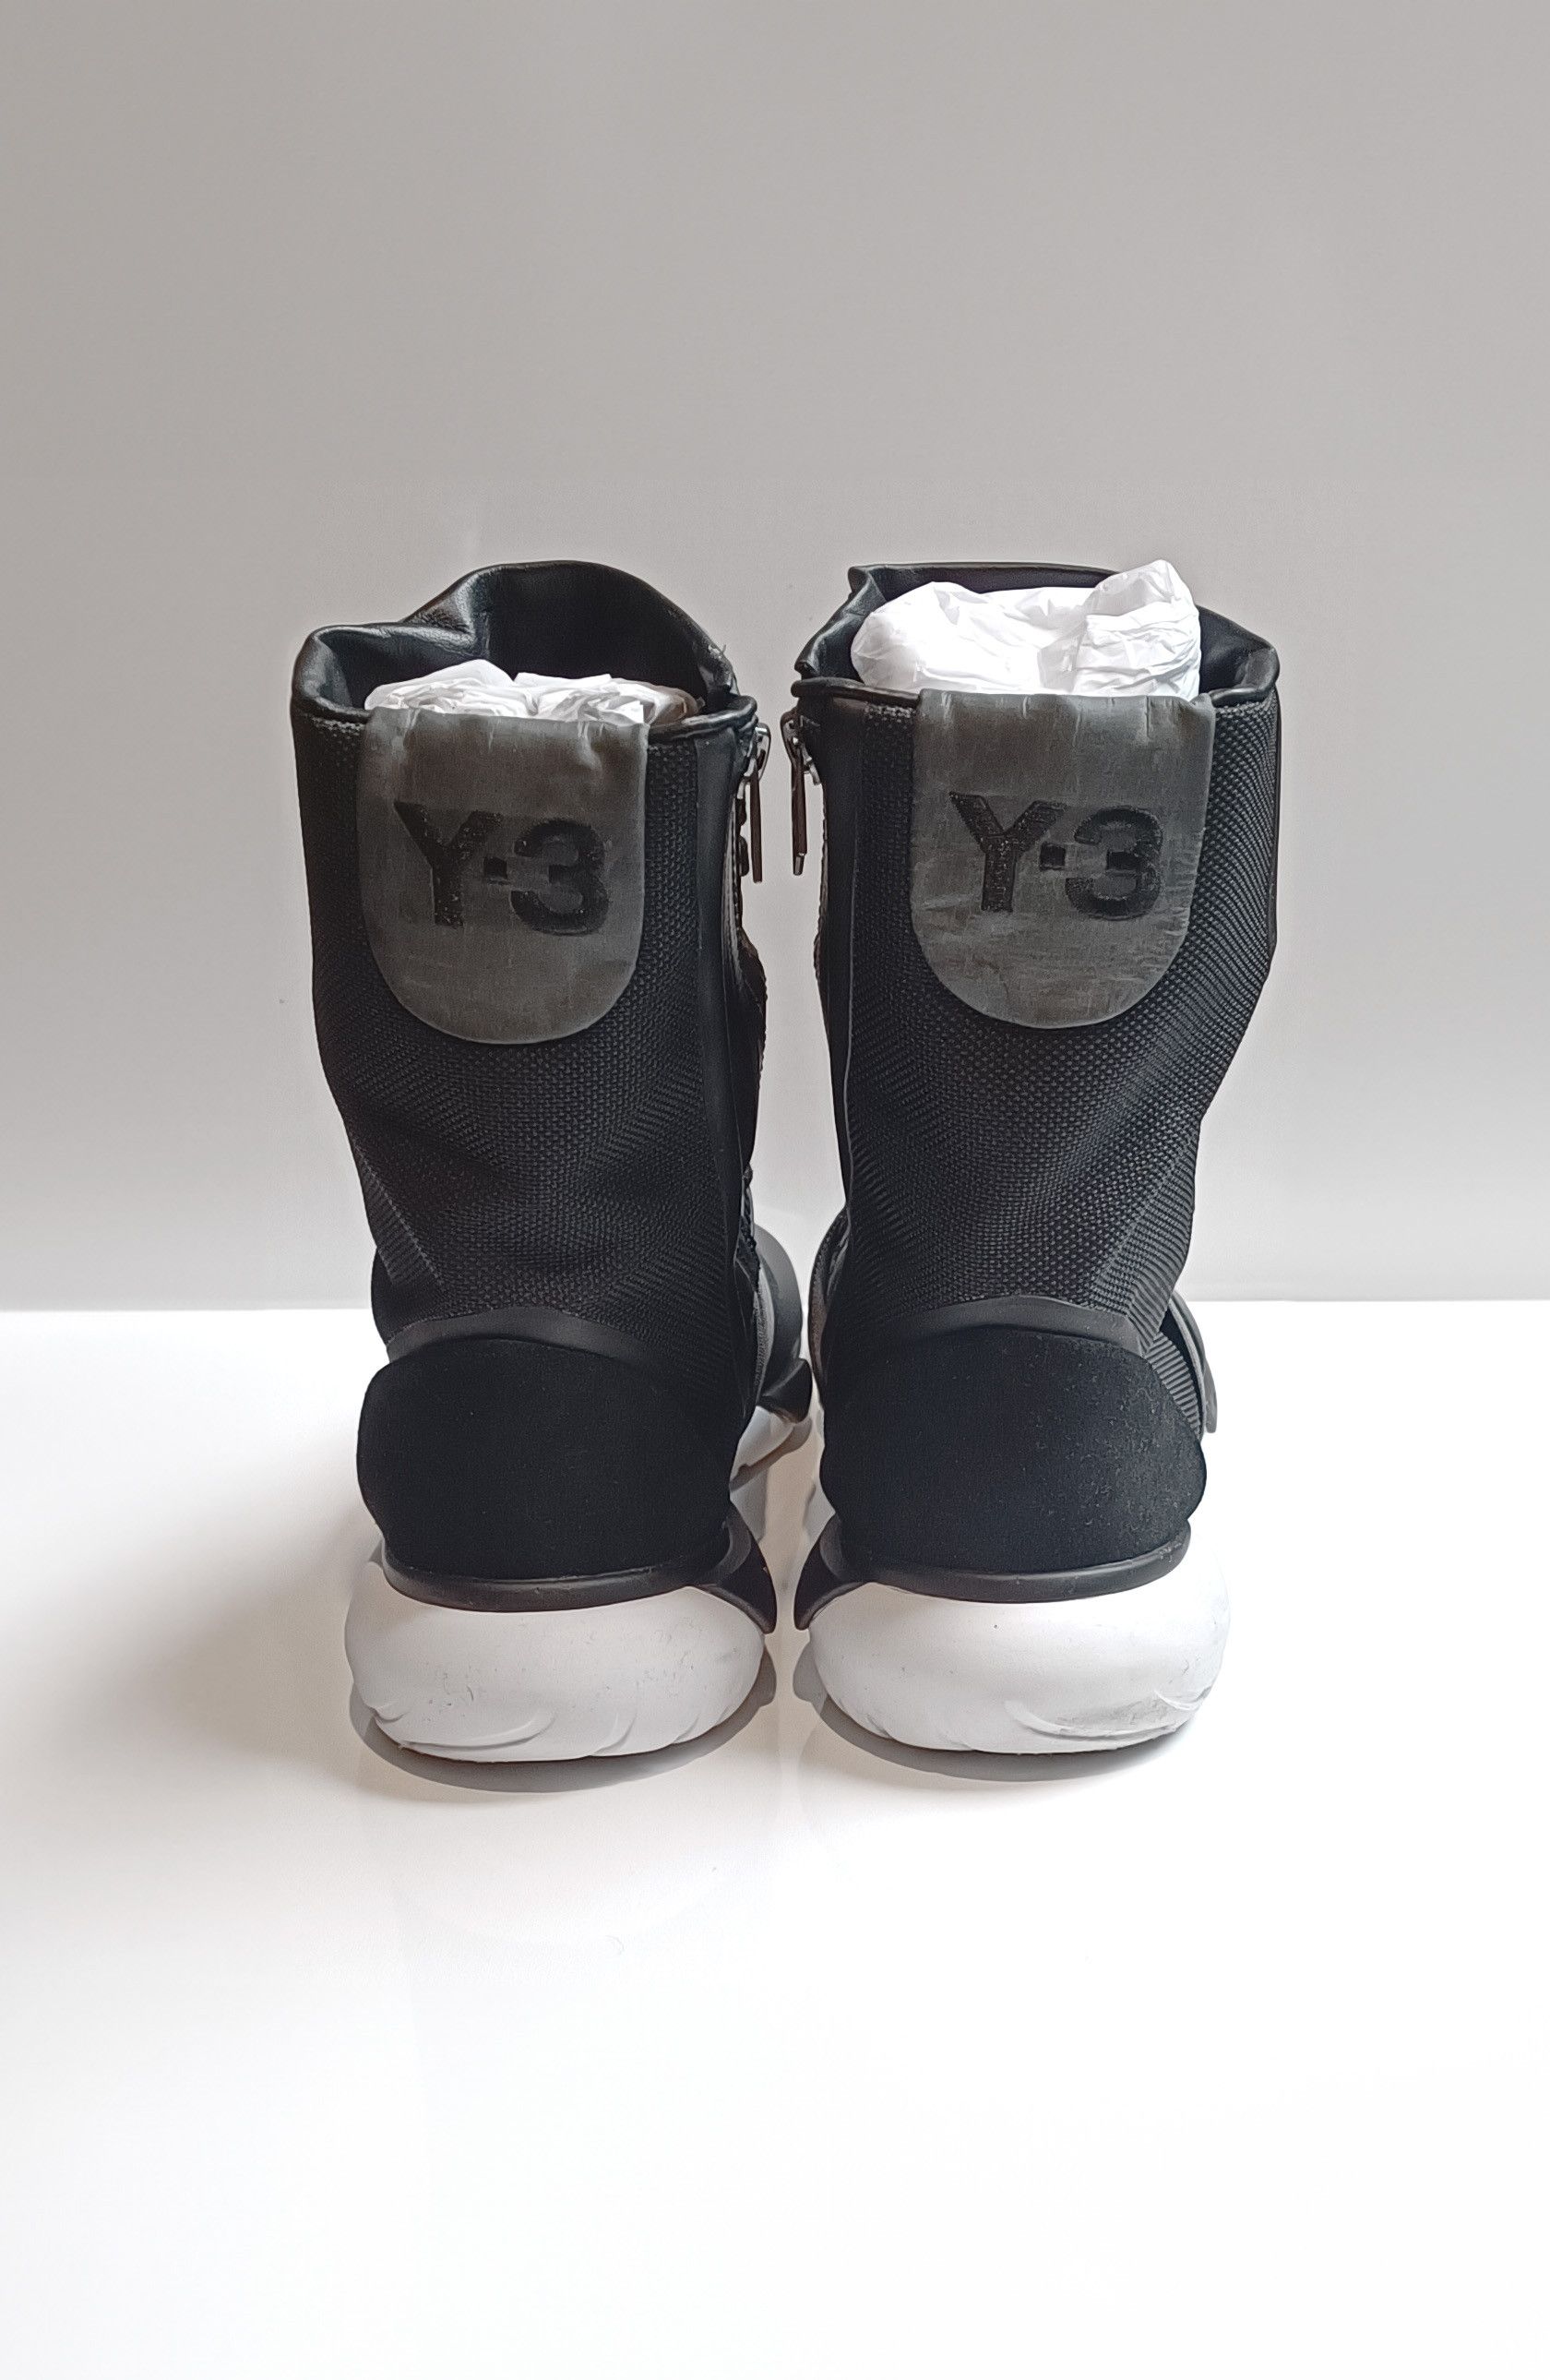 Adidas Y-3 Qasa Boot 'Charcoal Black' - 7